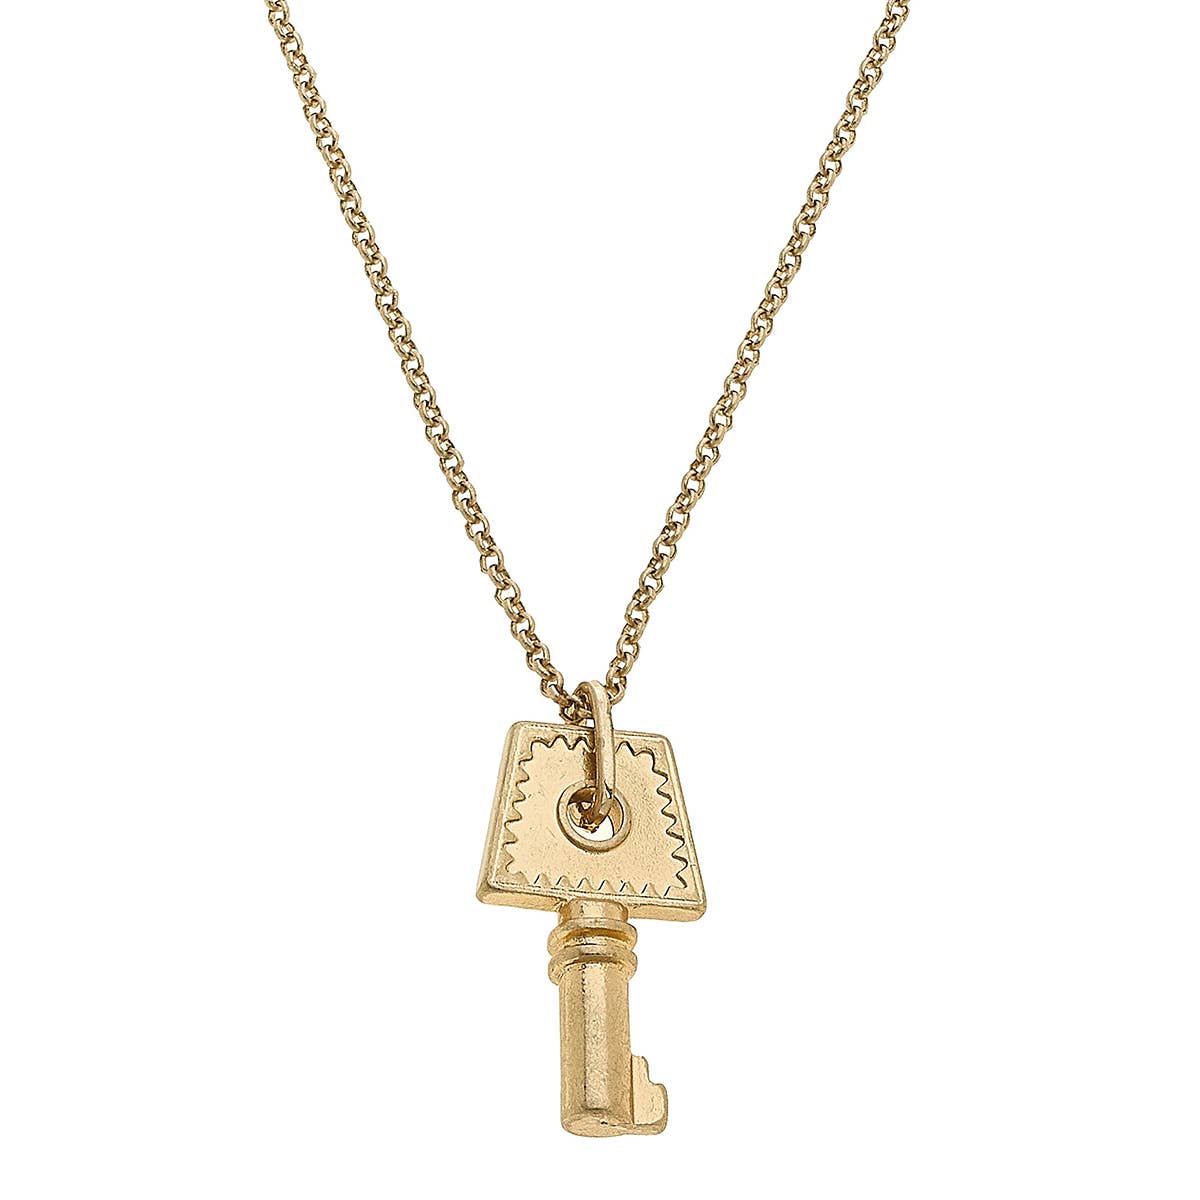 Boston Key Delicate Chain Necklace - Worn Gold